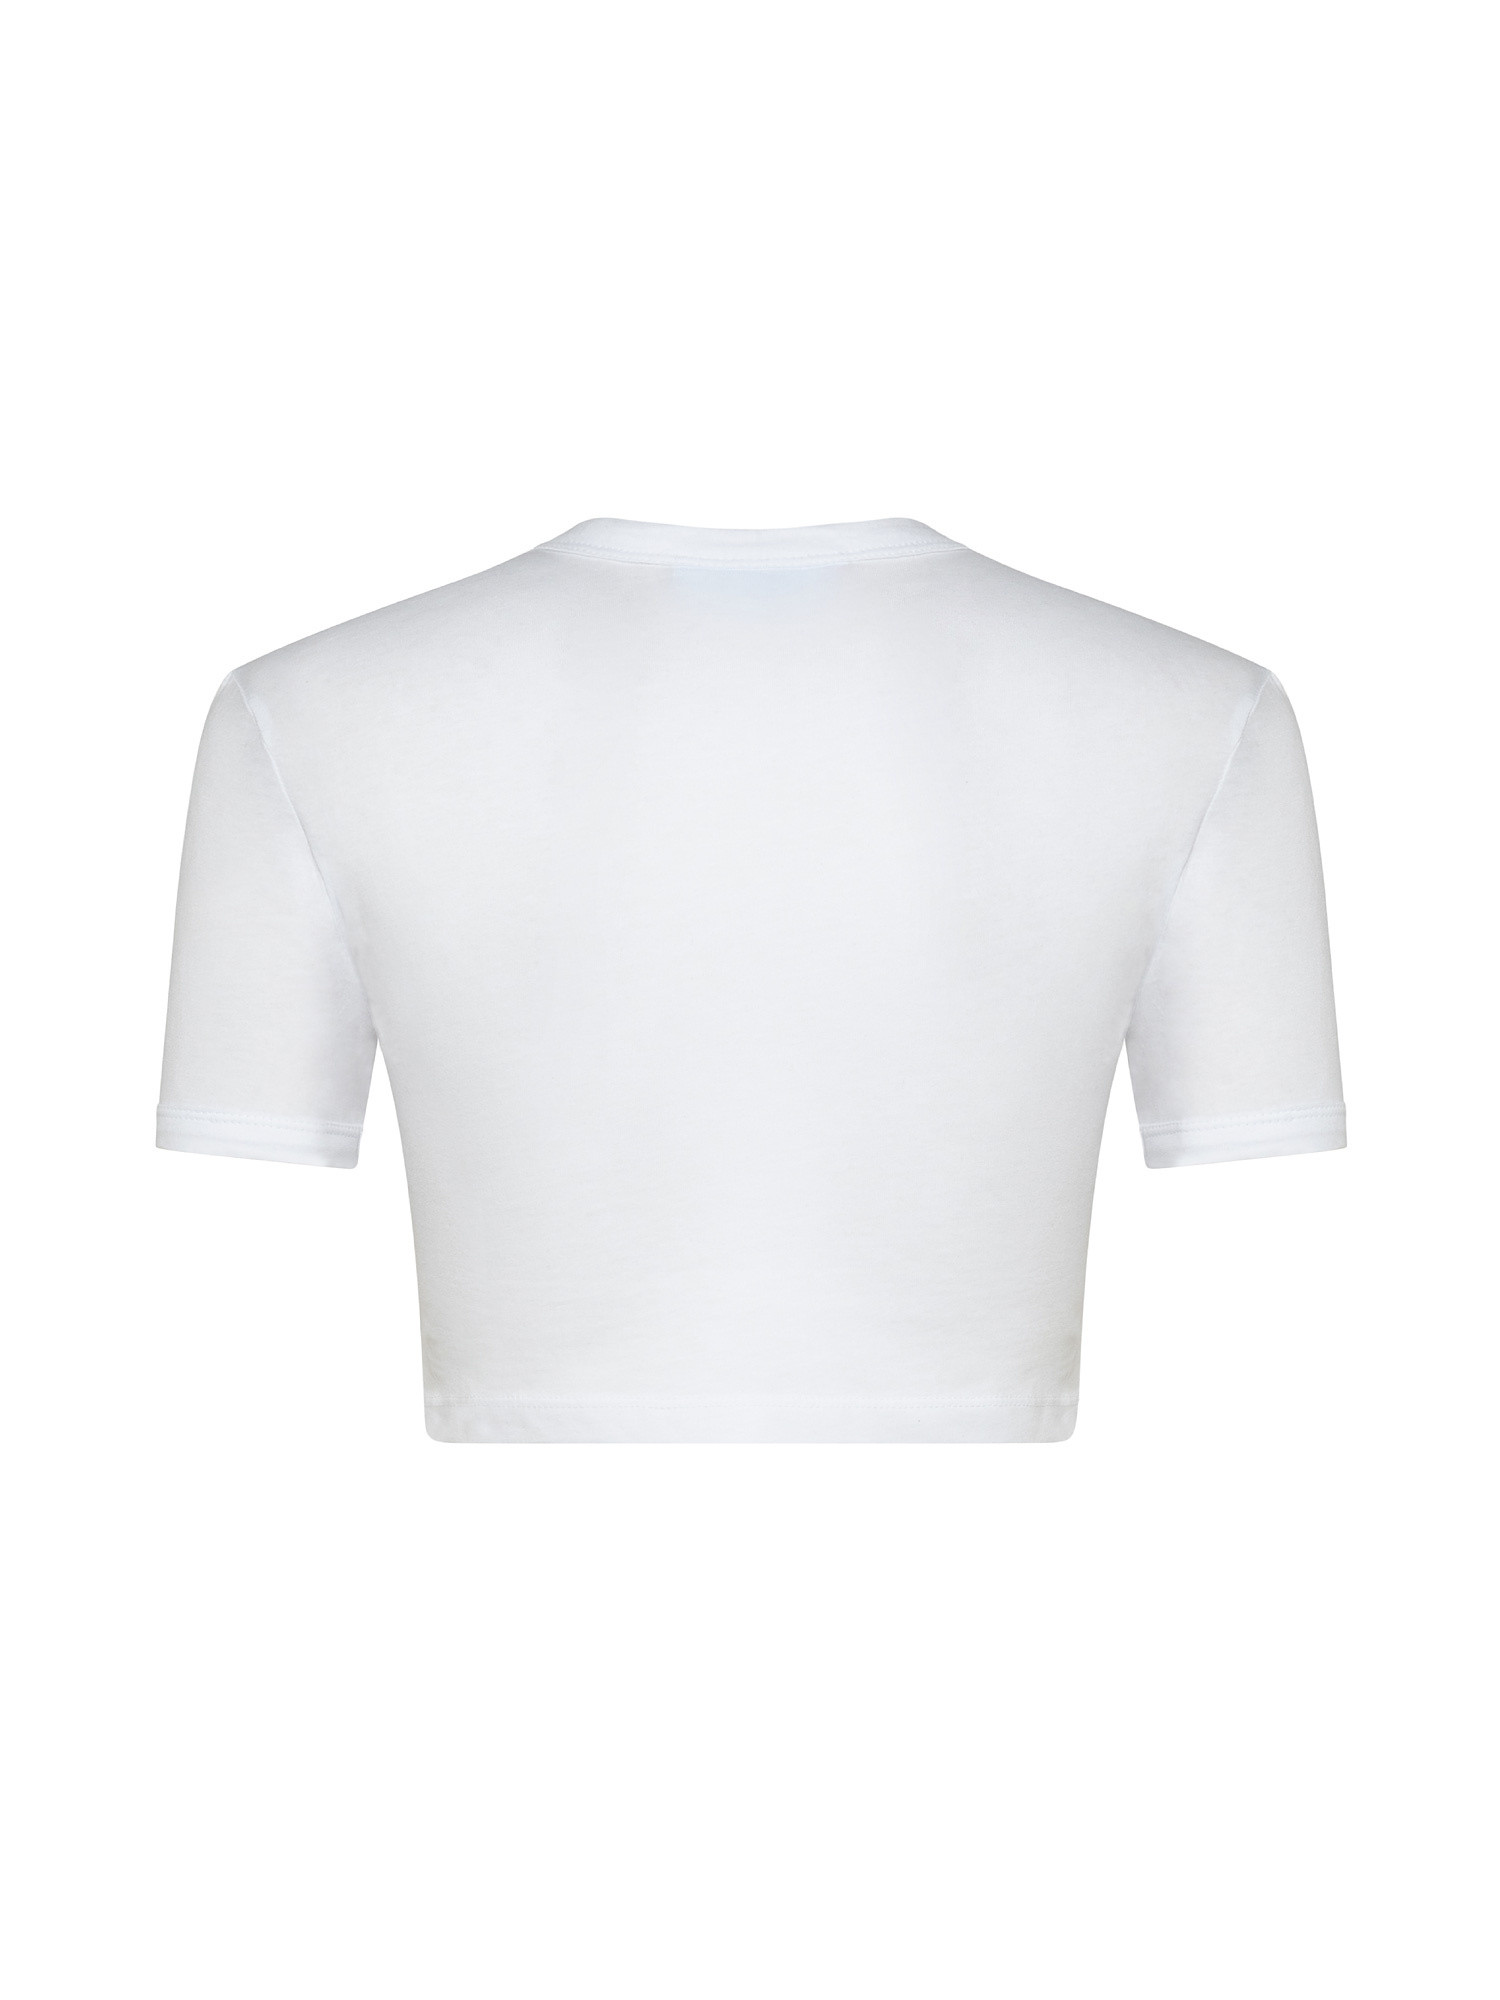 T-shirt crop, Bianco, large image number 1